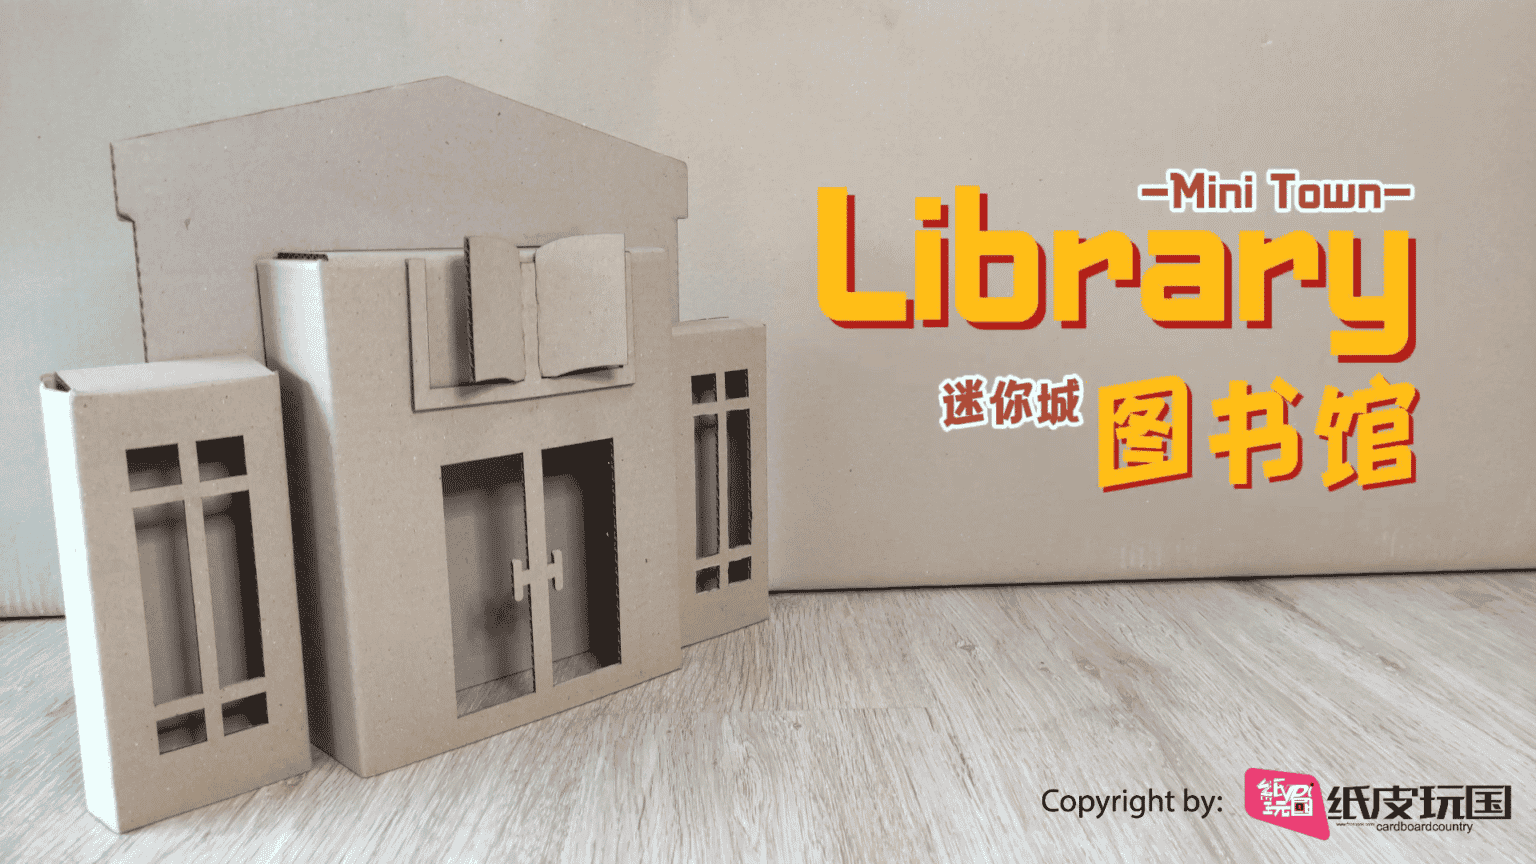 (215) Mini Town_Library 迷你城_图书馆 - YouTube